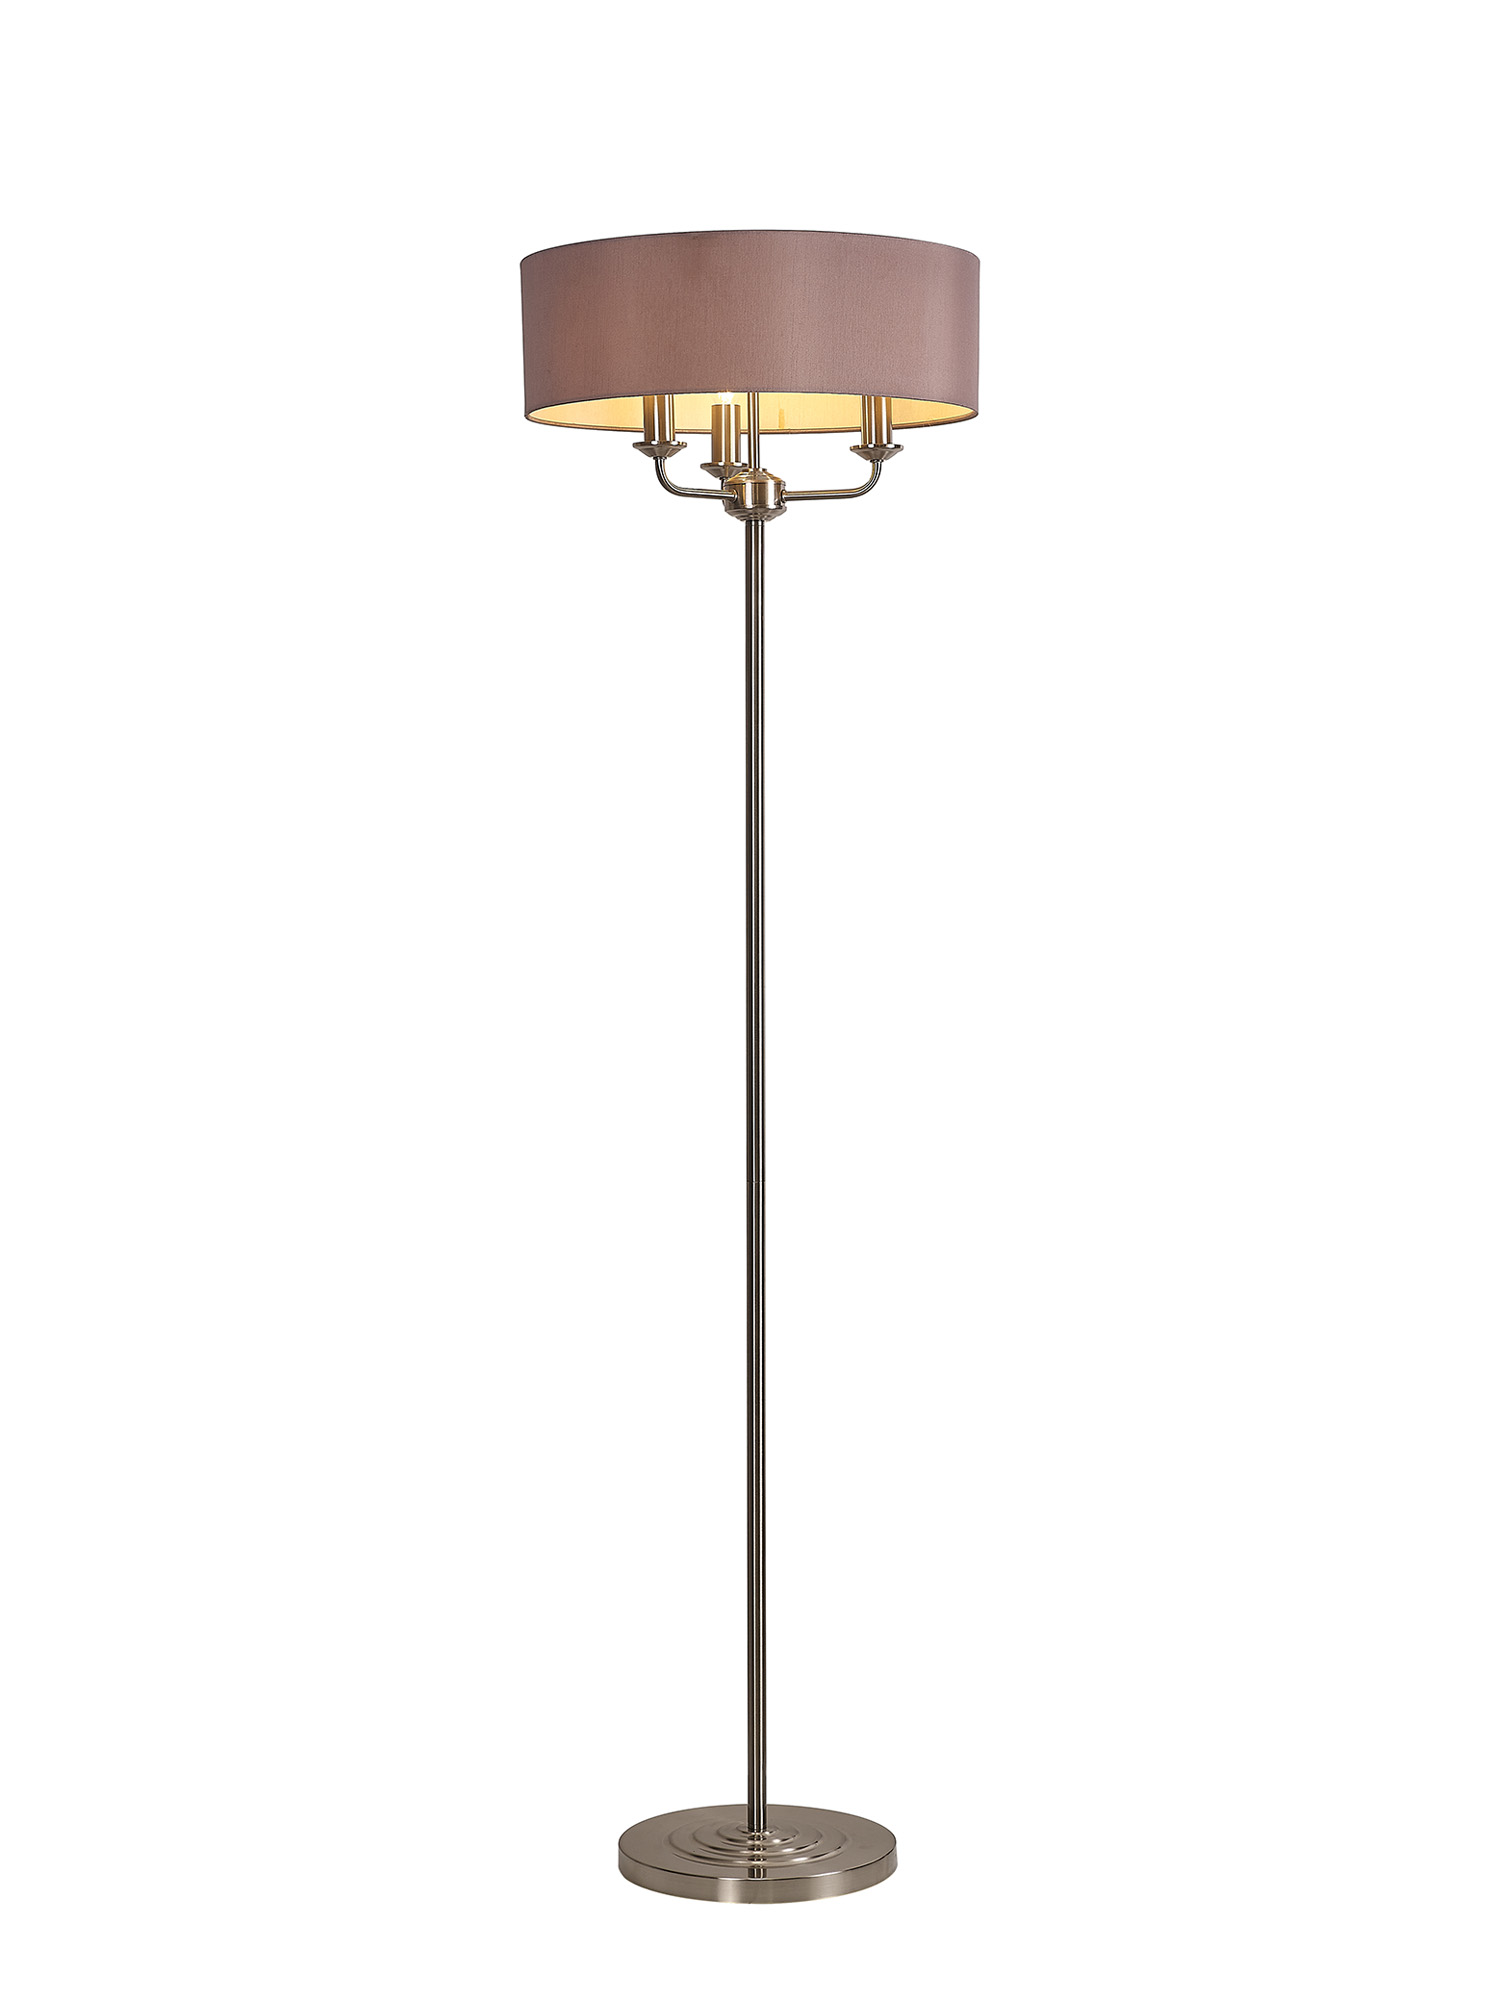 DK0926  Banyan 45cm 3 Light Floor Lamp Satin Nickel, Taupe